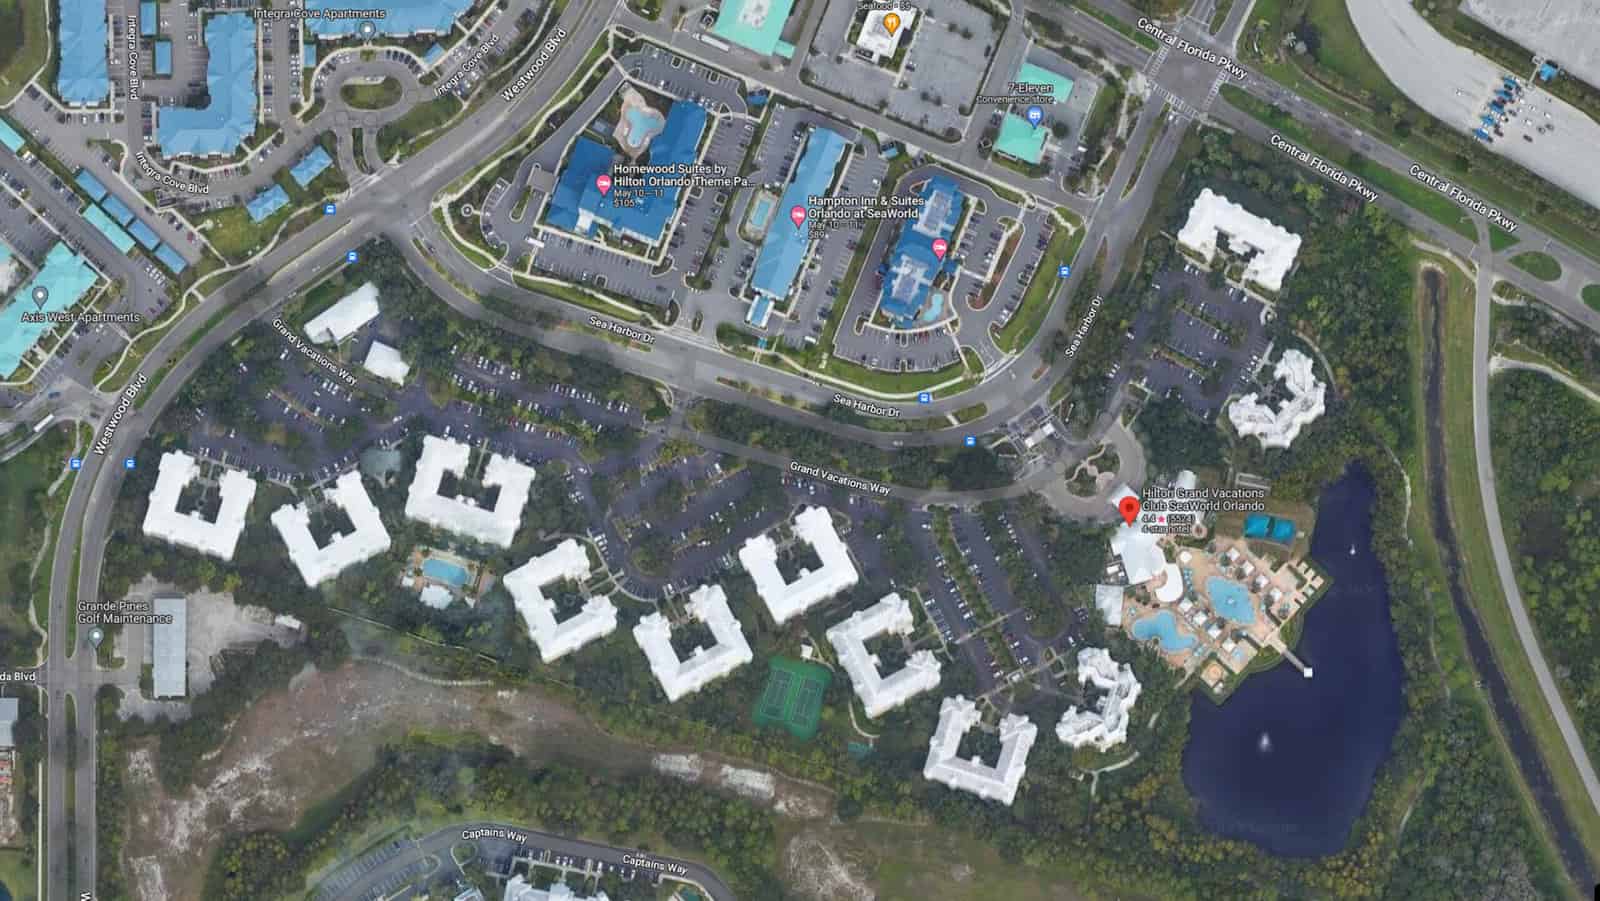 Hilton Grand Vacations Club SeaWorld Orlando - Location